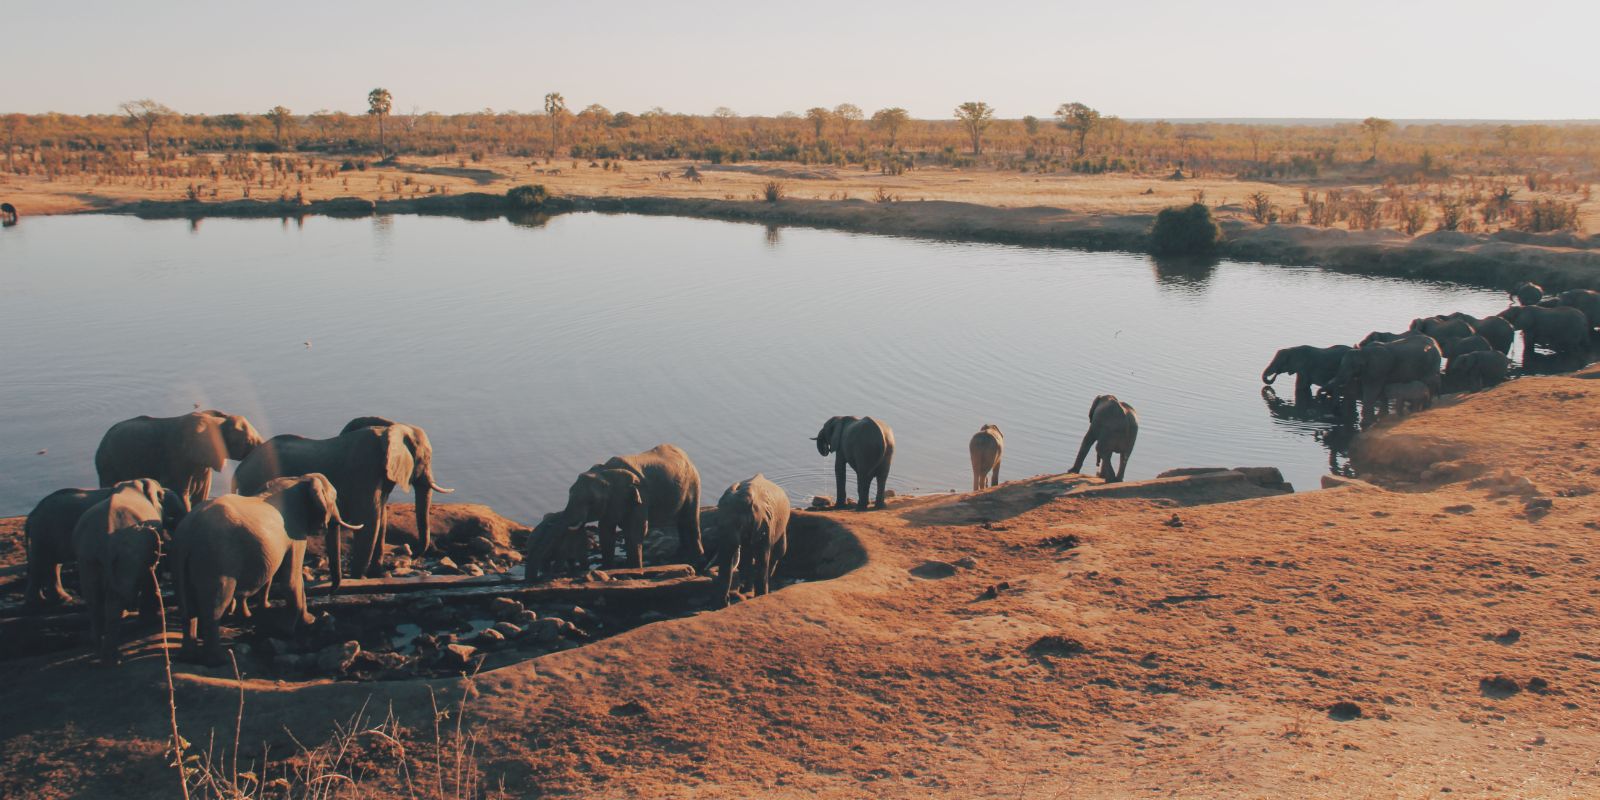 her of elephants in Hwange National Park, Zimbabwe